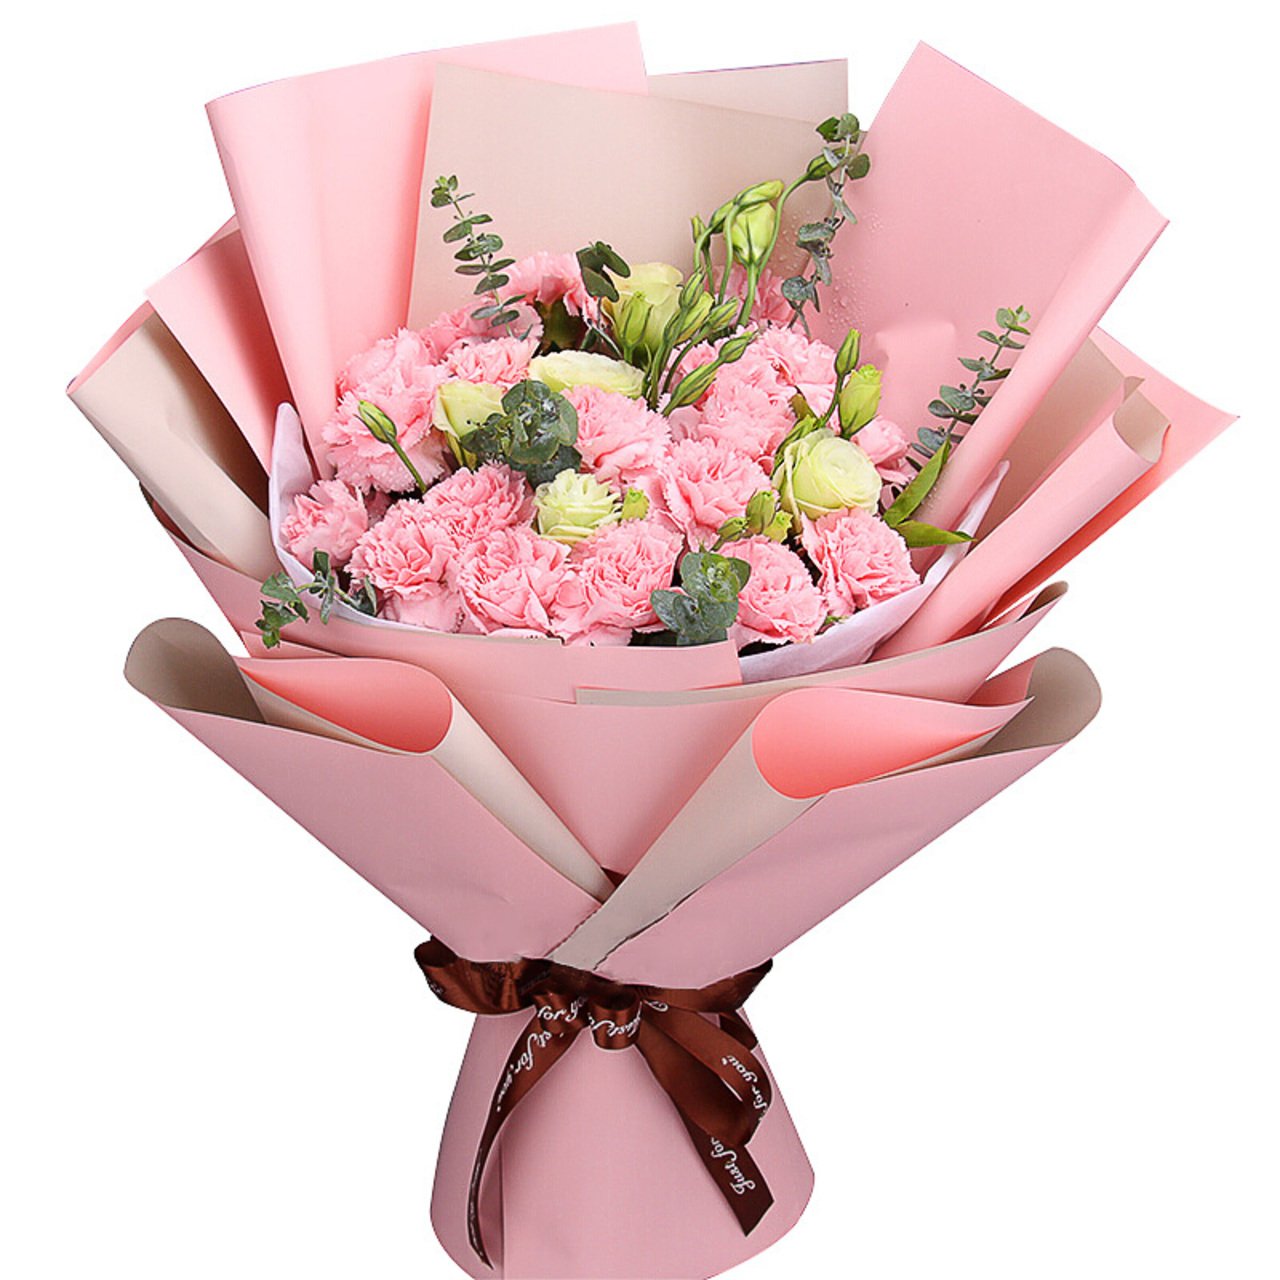 Heartbeat(
21 pink carnations)